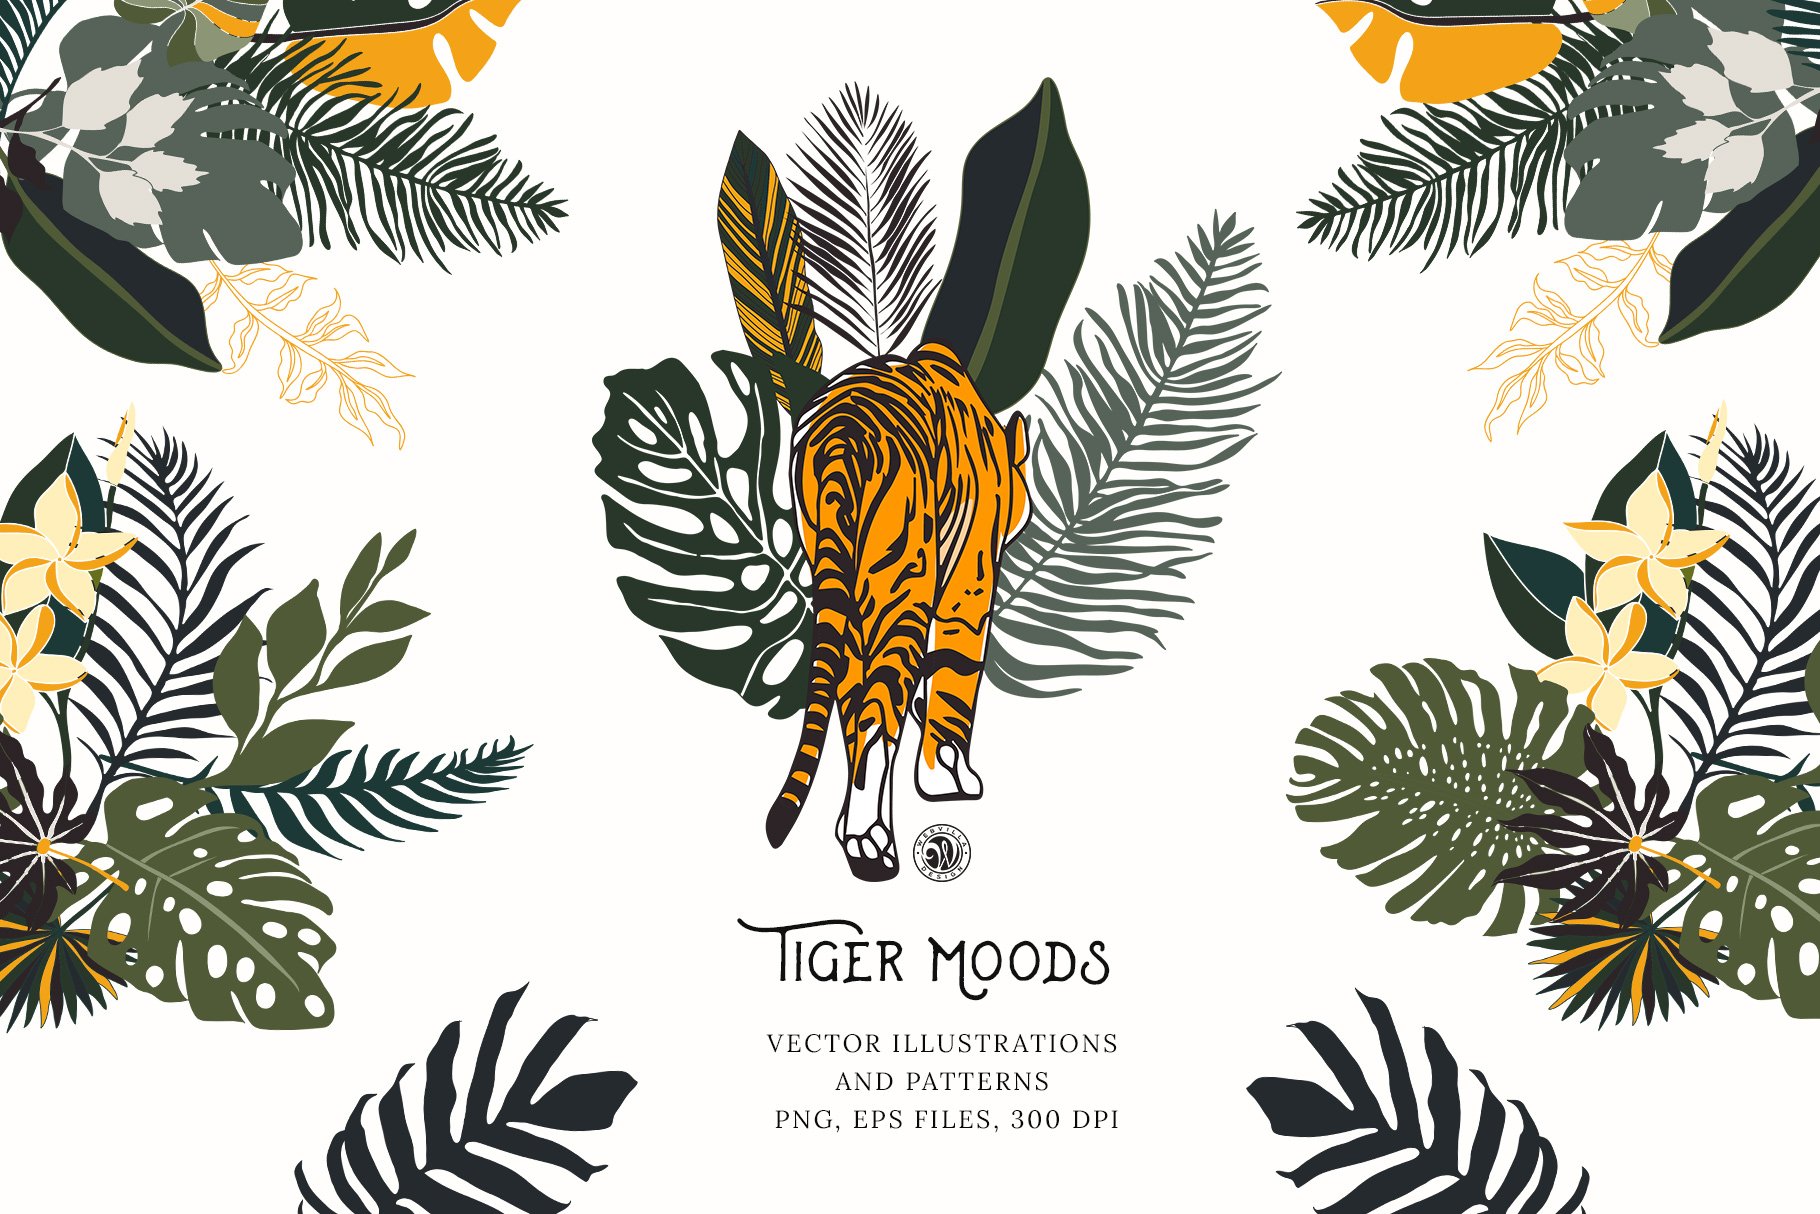 Tiger Moods